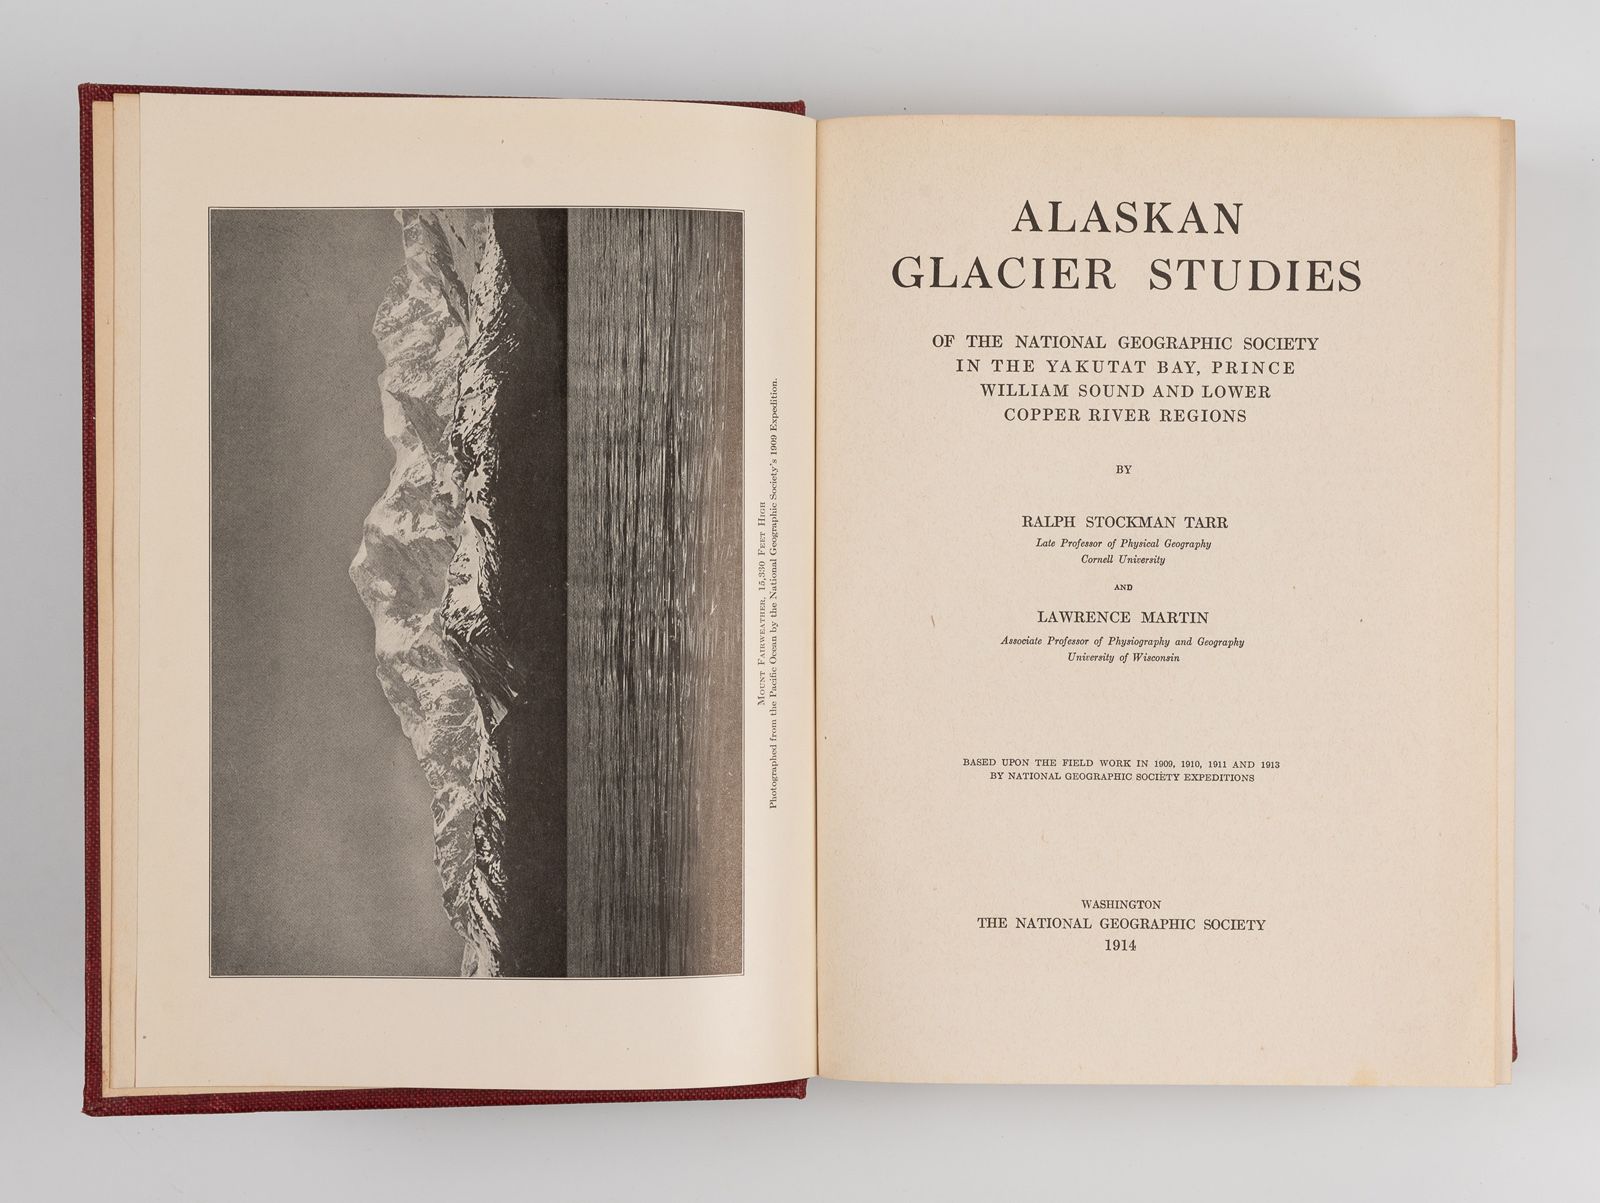 TARR et MARTIN. TARR und MARTIN.
Alaskan glacier studies.
Washington: The nation&hellip;